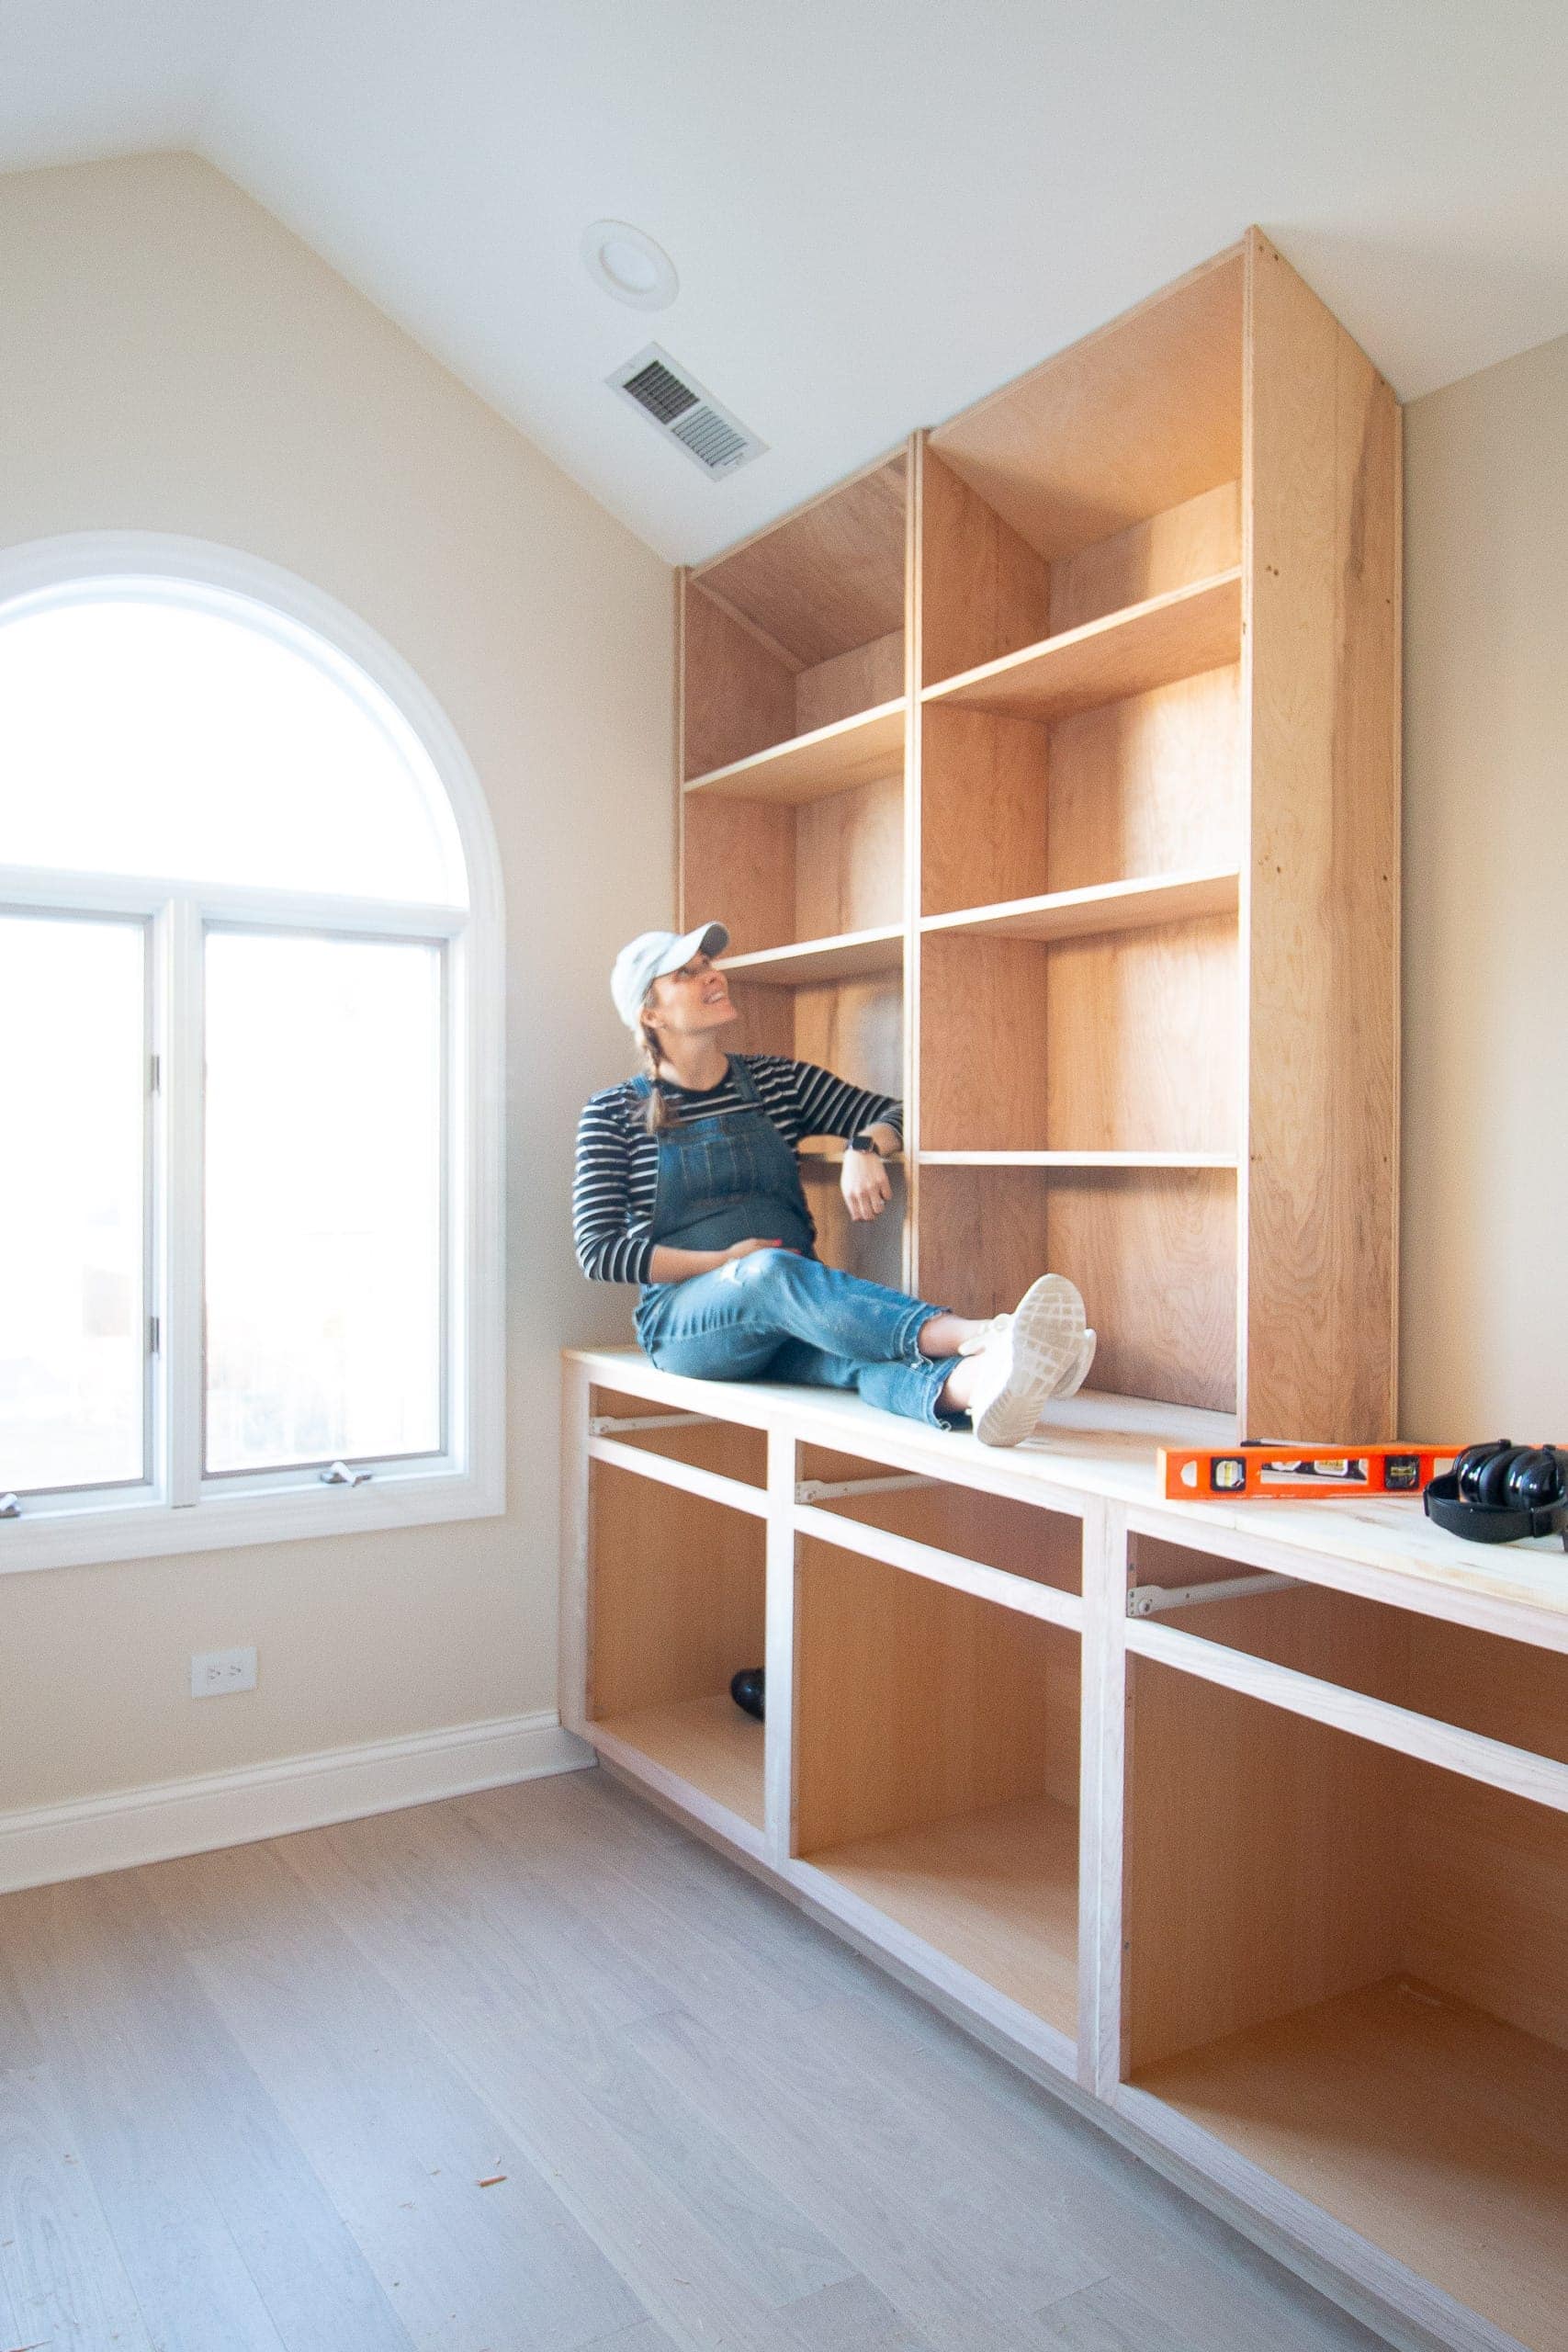 How to build DIY bookshelves for built-ins